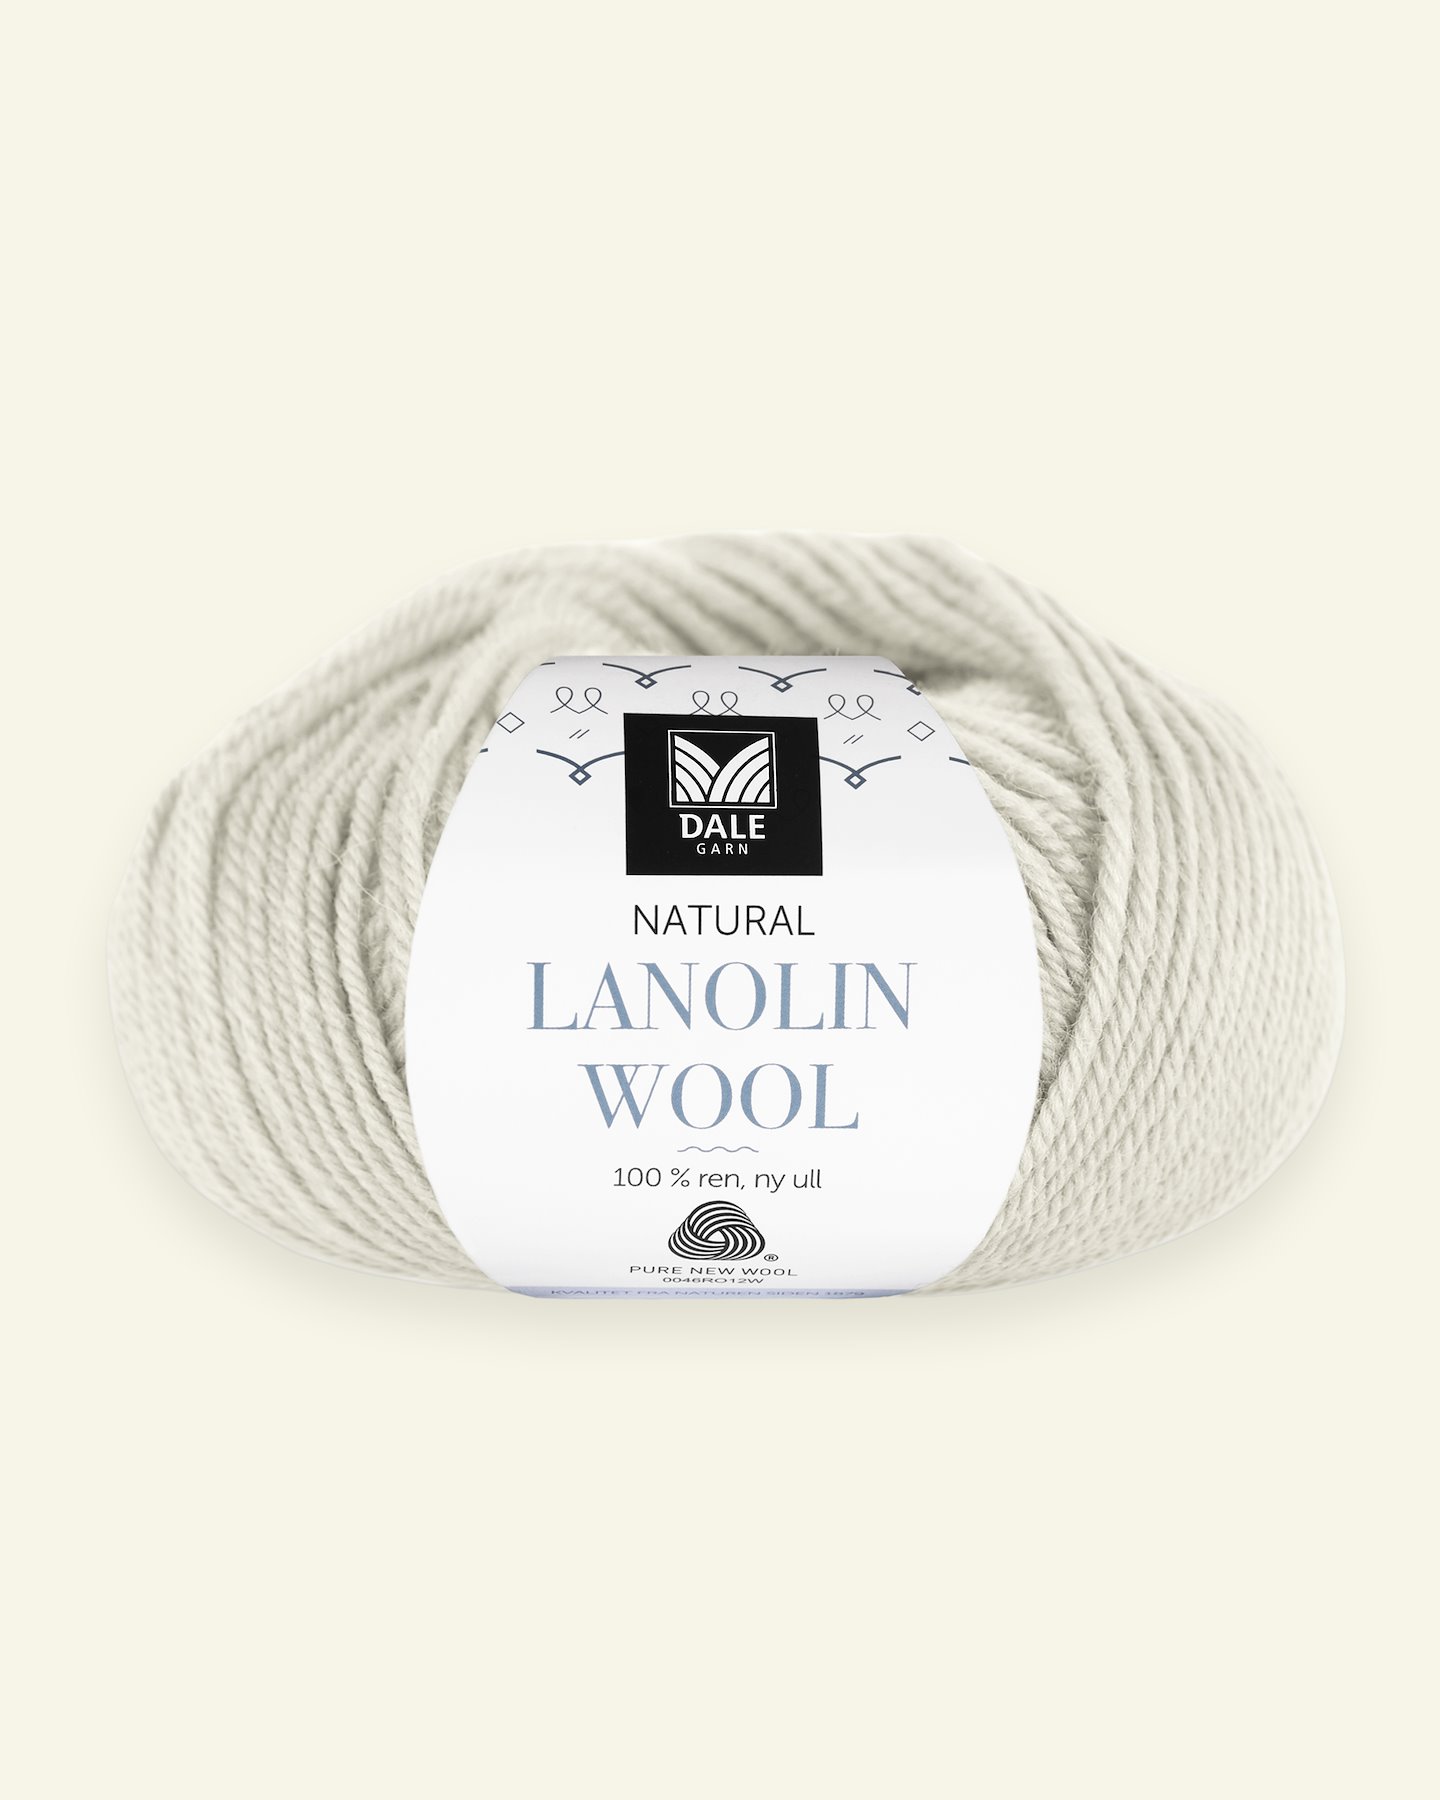 Dale Garn, 100% wool yarn "Lanolin Wool", putty (1444) 90000295_pack